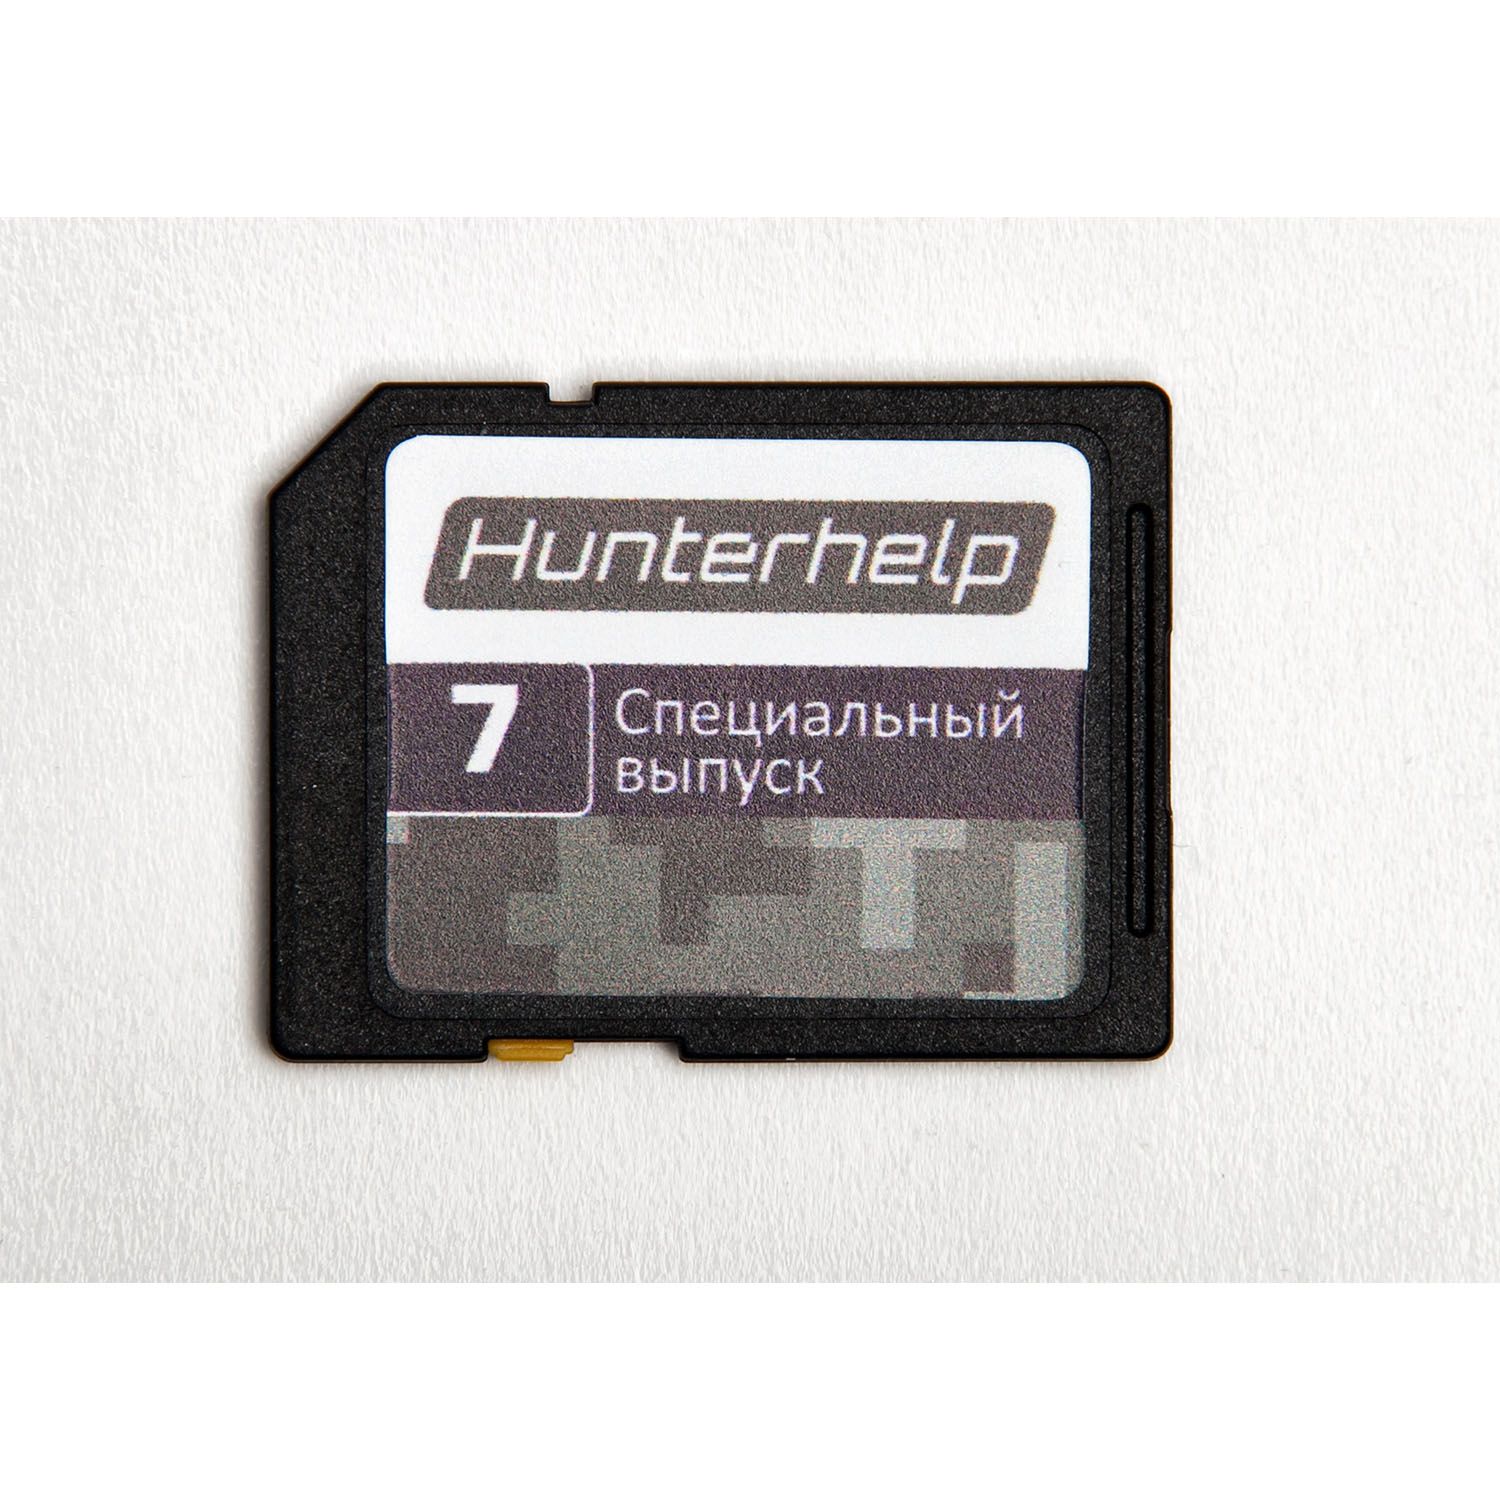 Электроманок Hunterhelp Standart-3, фонотека 7, без динамика